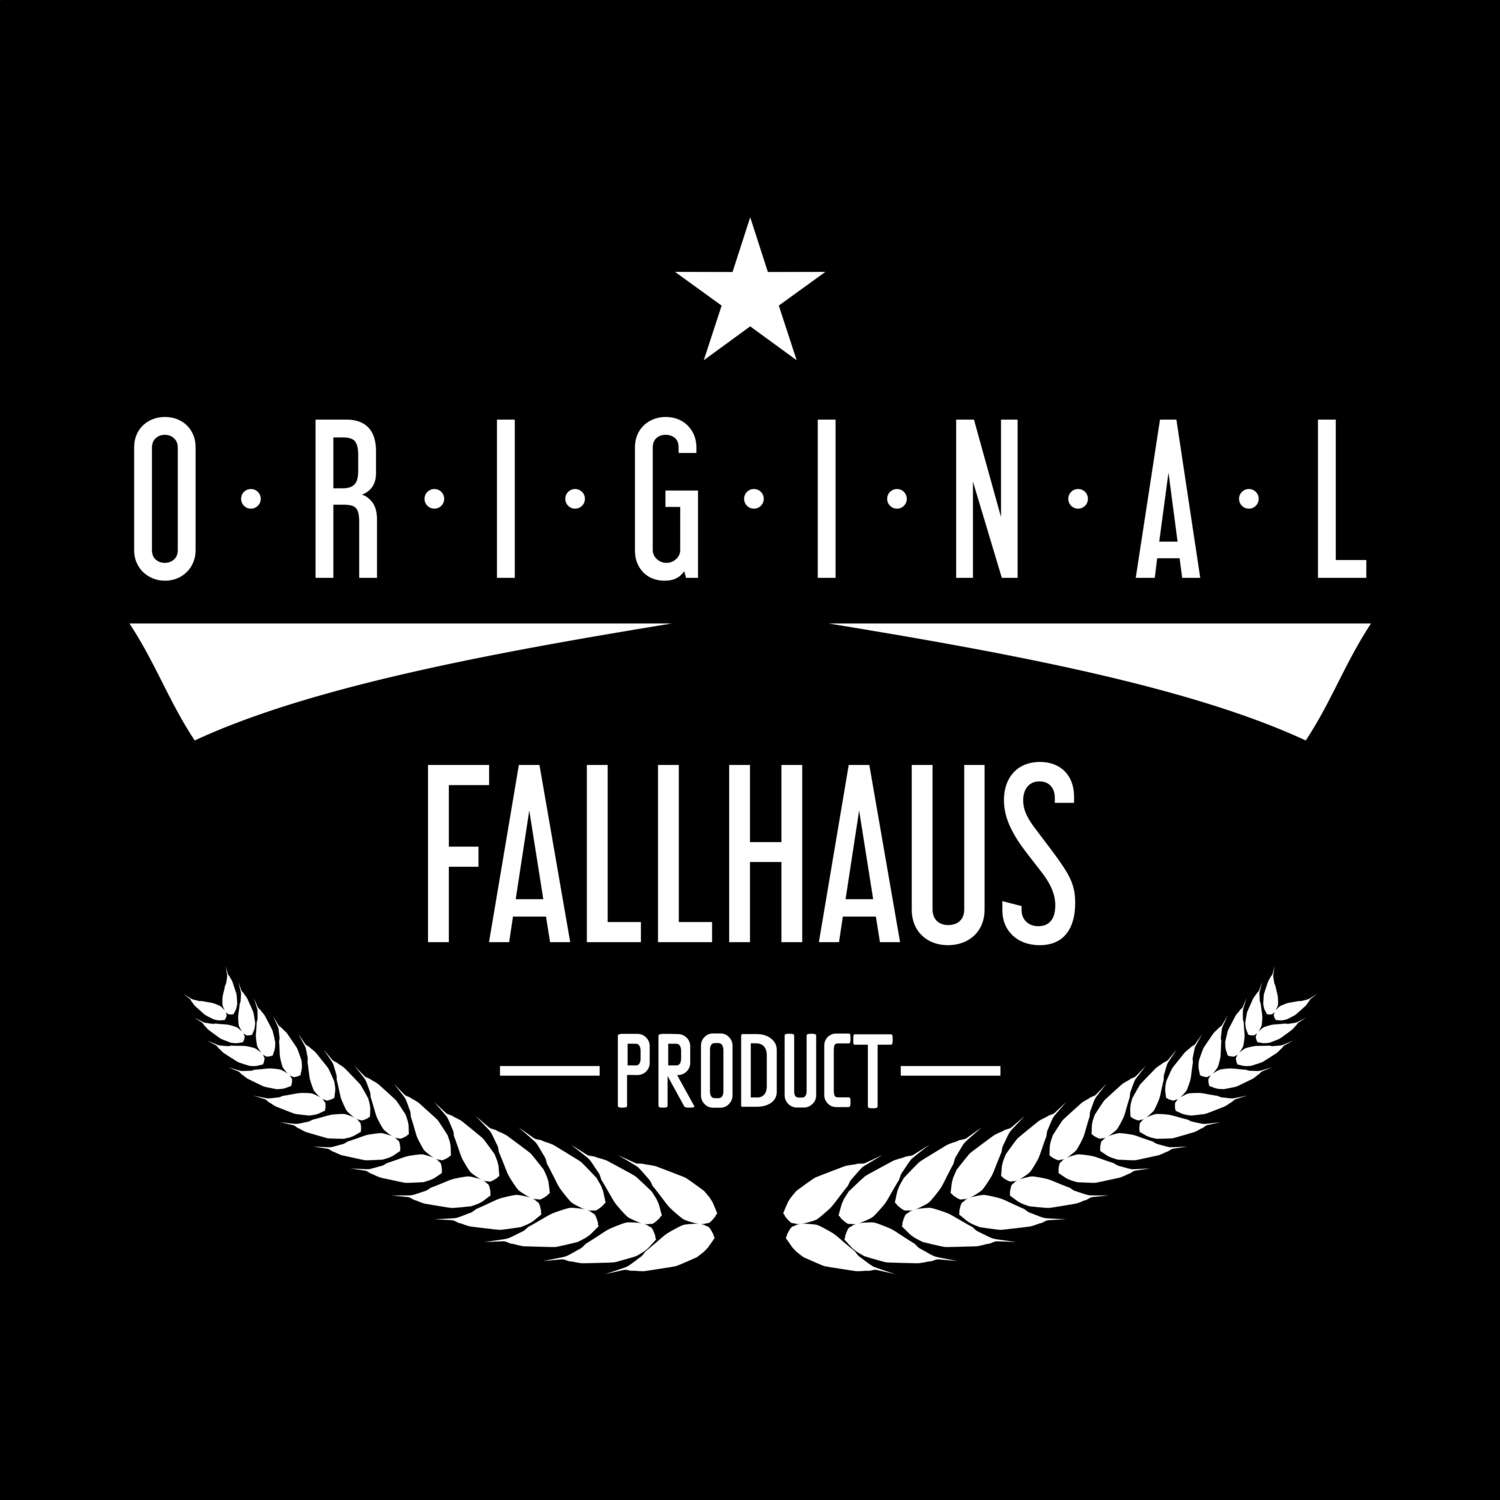 Fallhaus T-Shirt »Original Product«